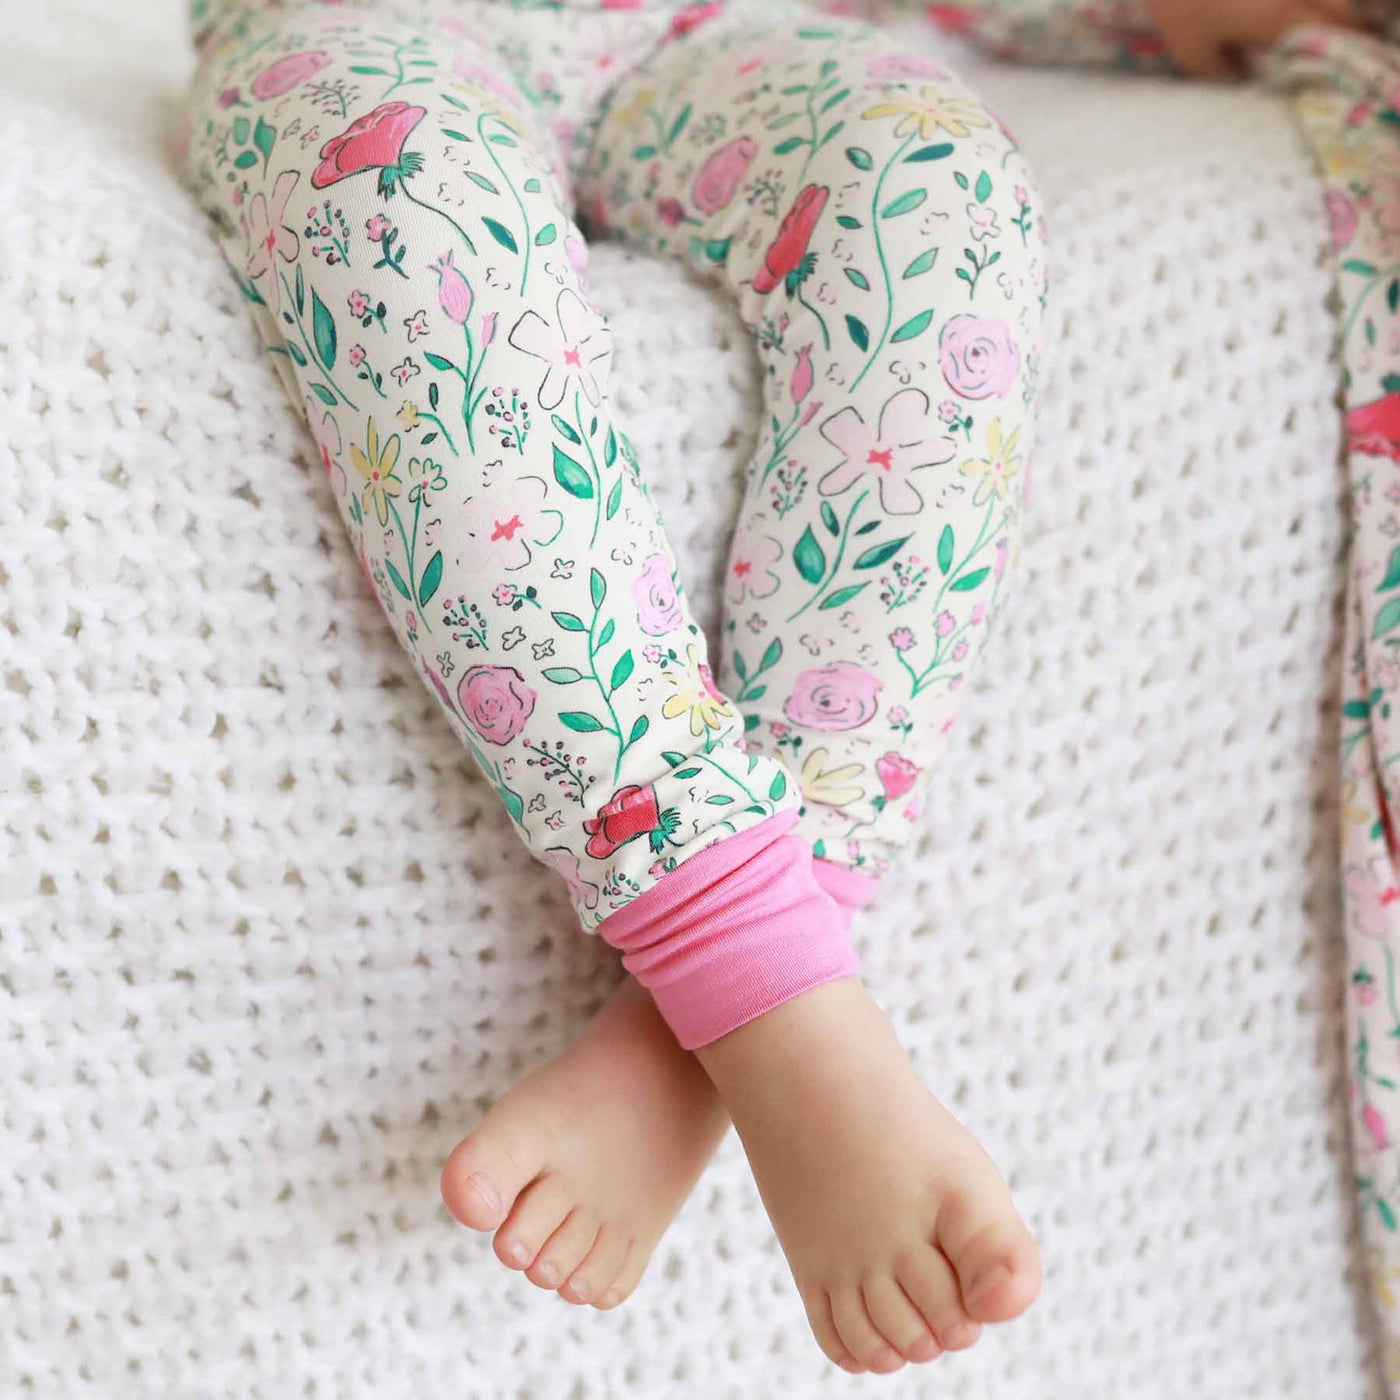 paris petals 2pc pajama set for kids 